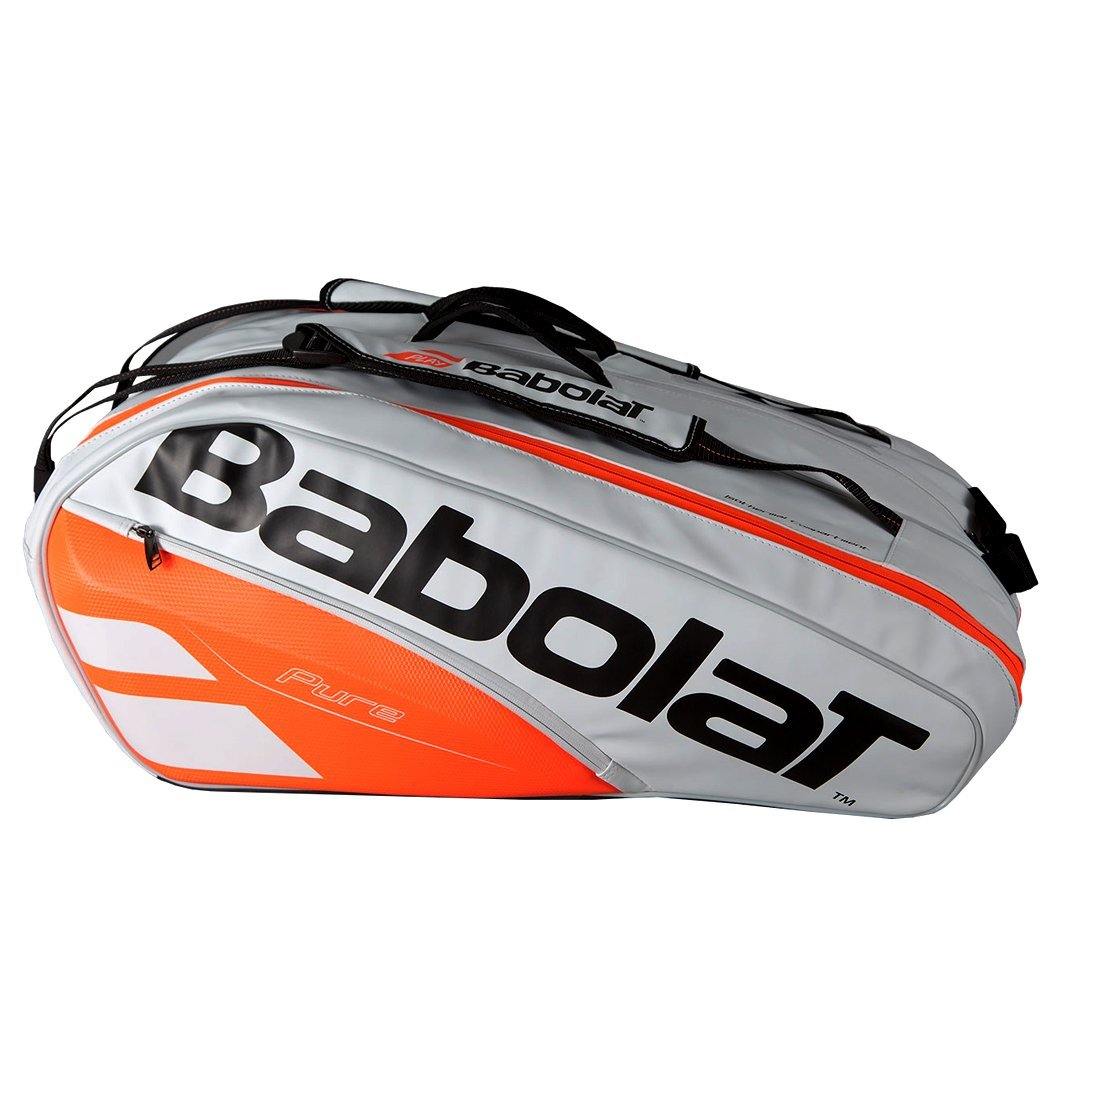 Babolat RHX12 Pure Strike Tennis Kitbag - White/Red - Best Price online Prokicksports.com